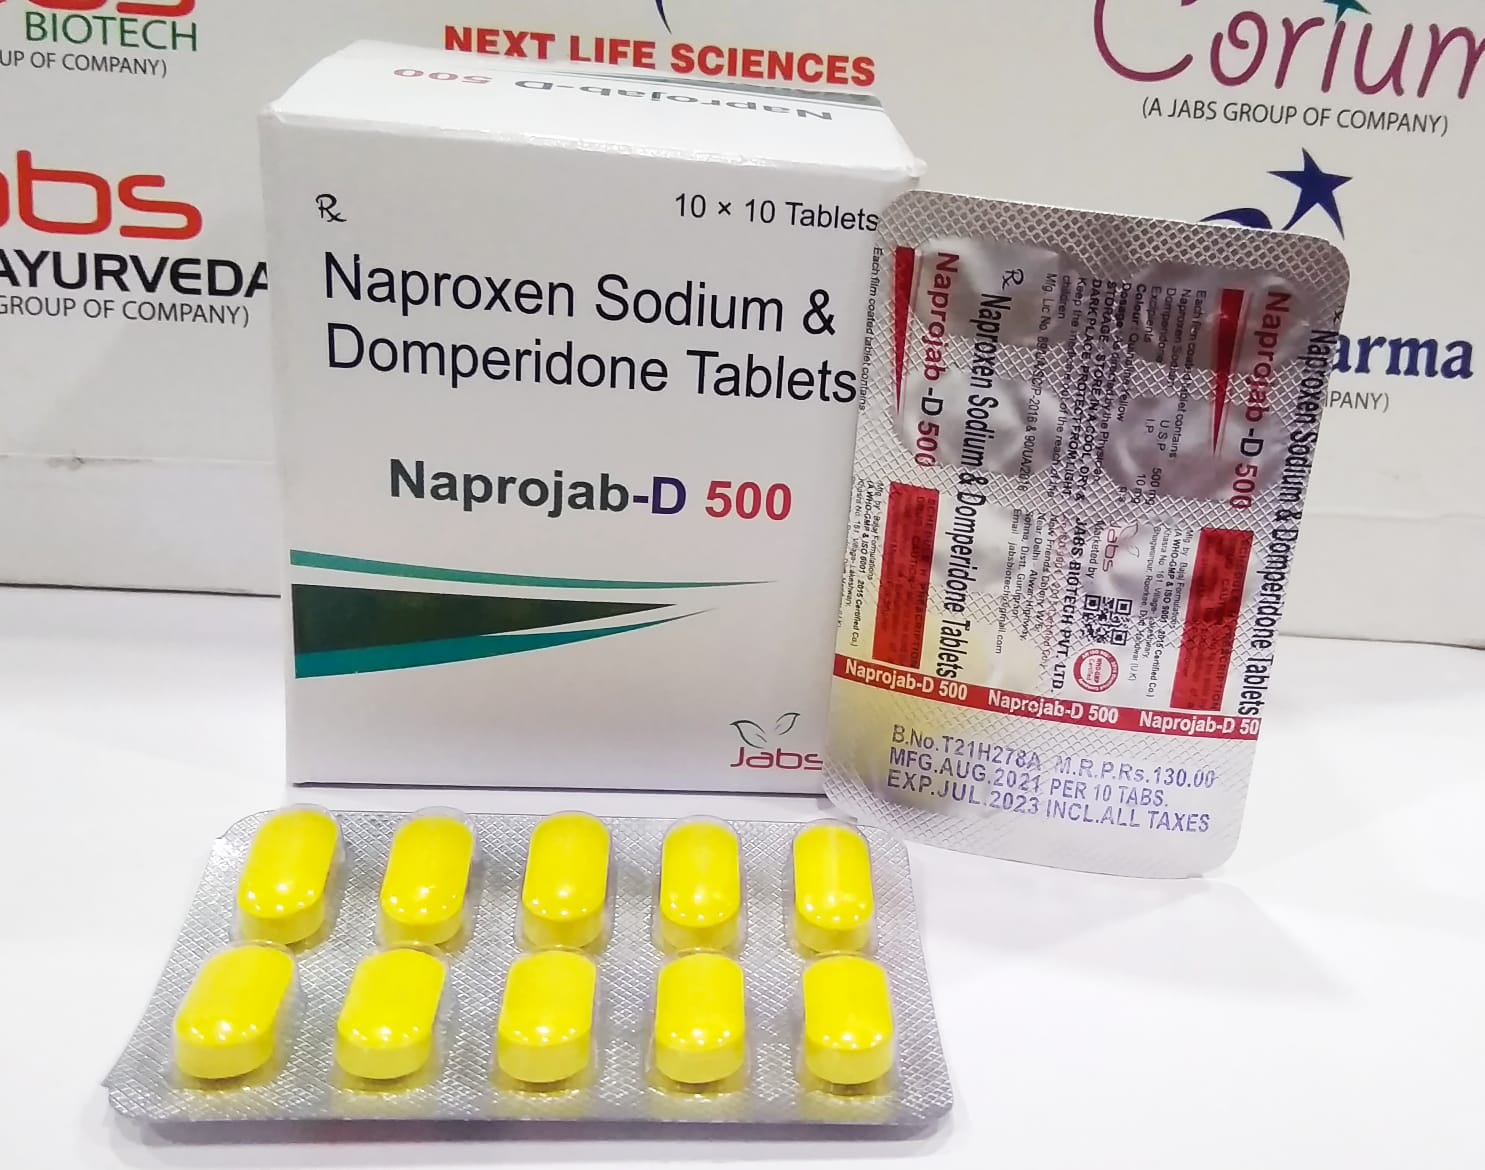 NAPROJAB-D-500 Tablets